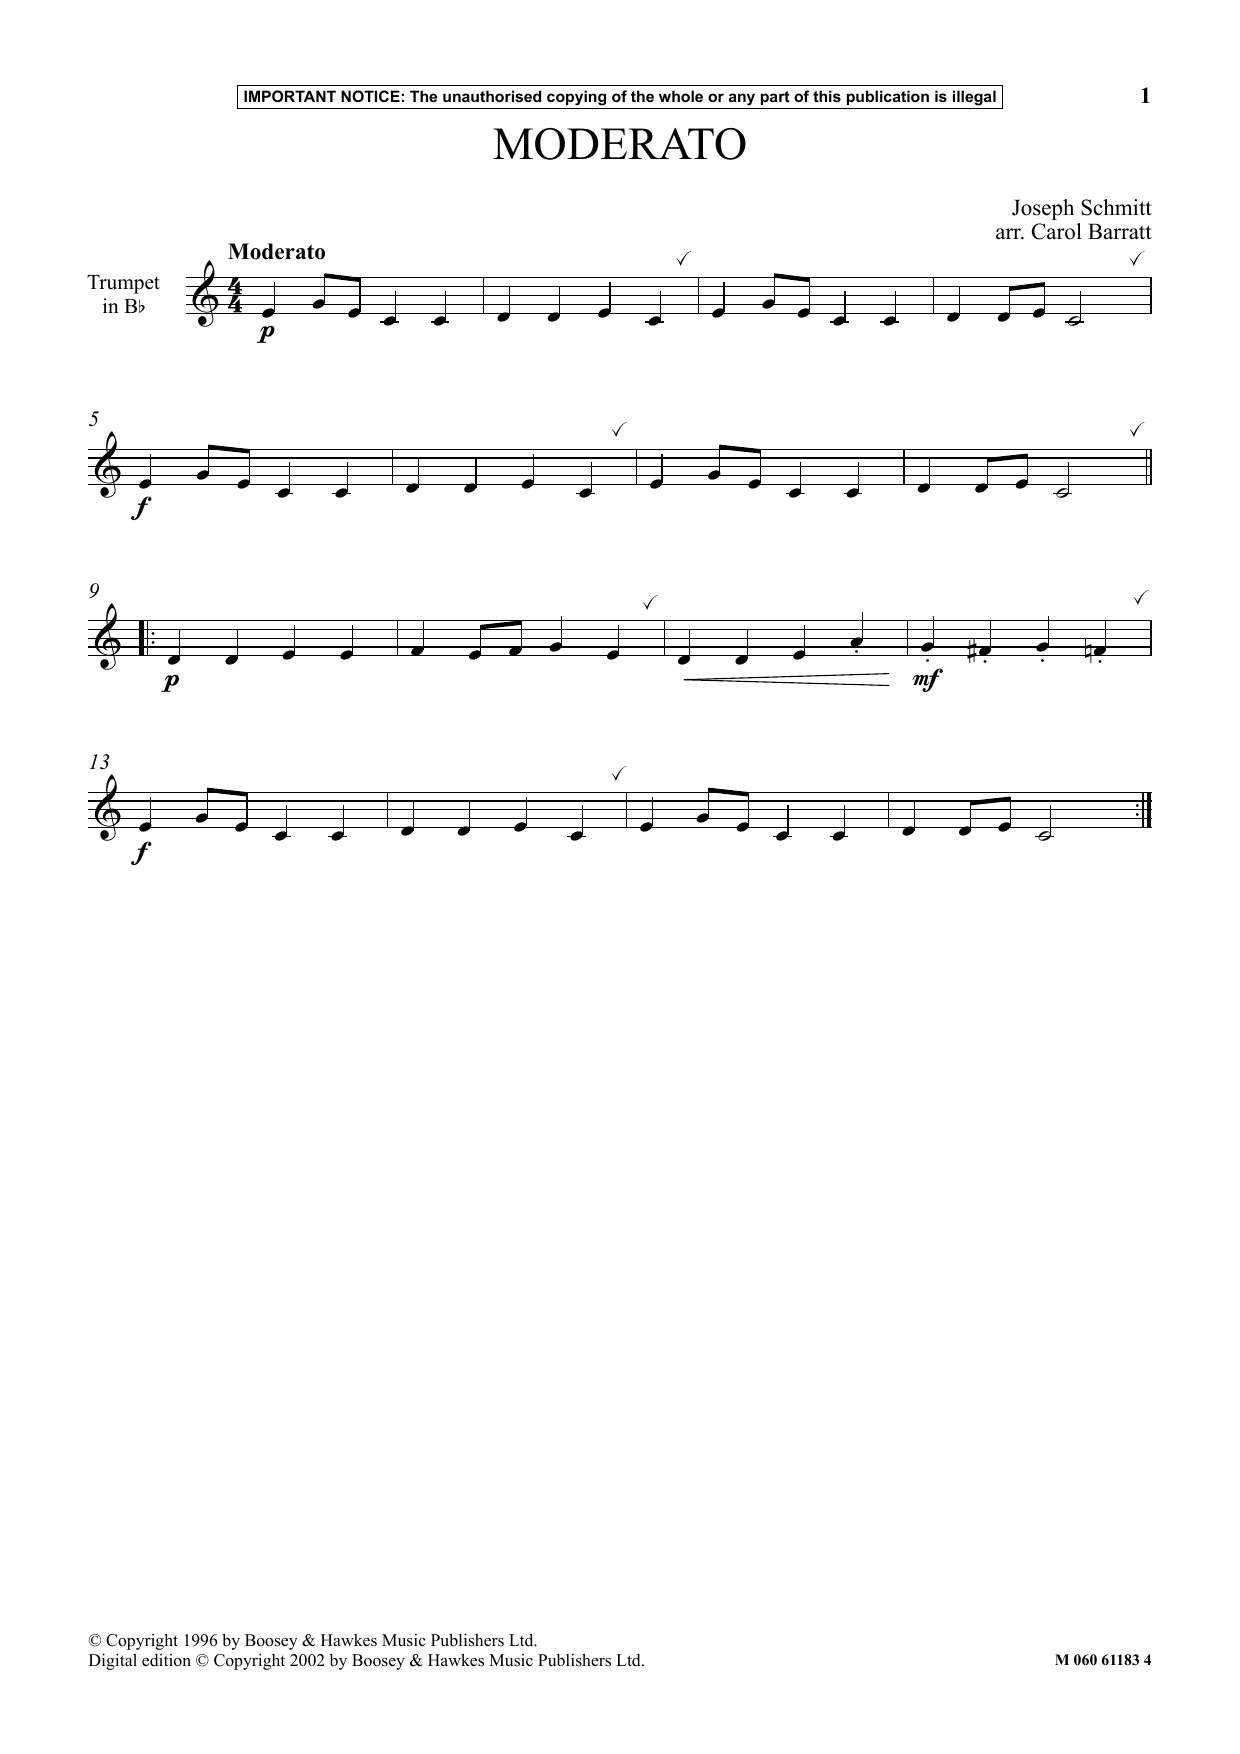 Joseph Schmitt Moderato Sheet Music Notes & Chords for Instrumental Solo - Download or Print PDF